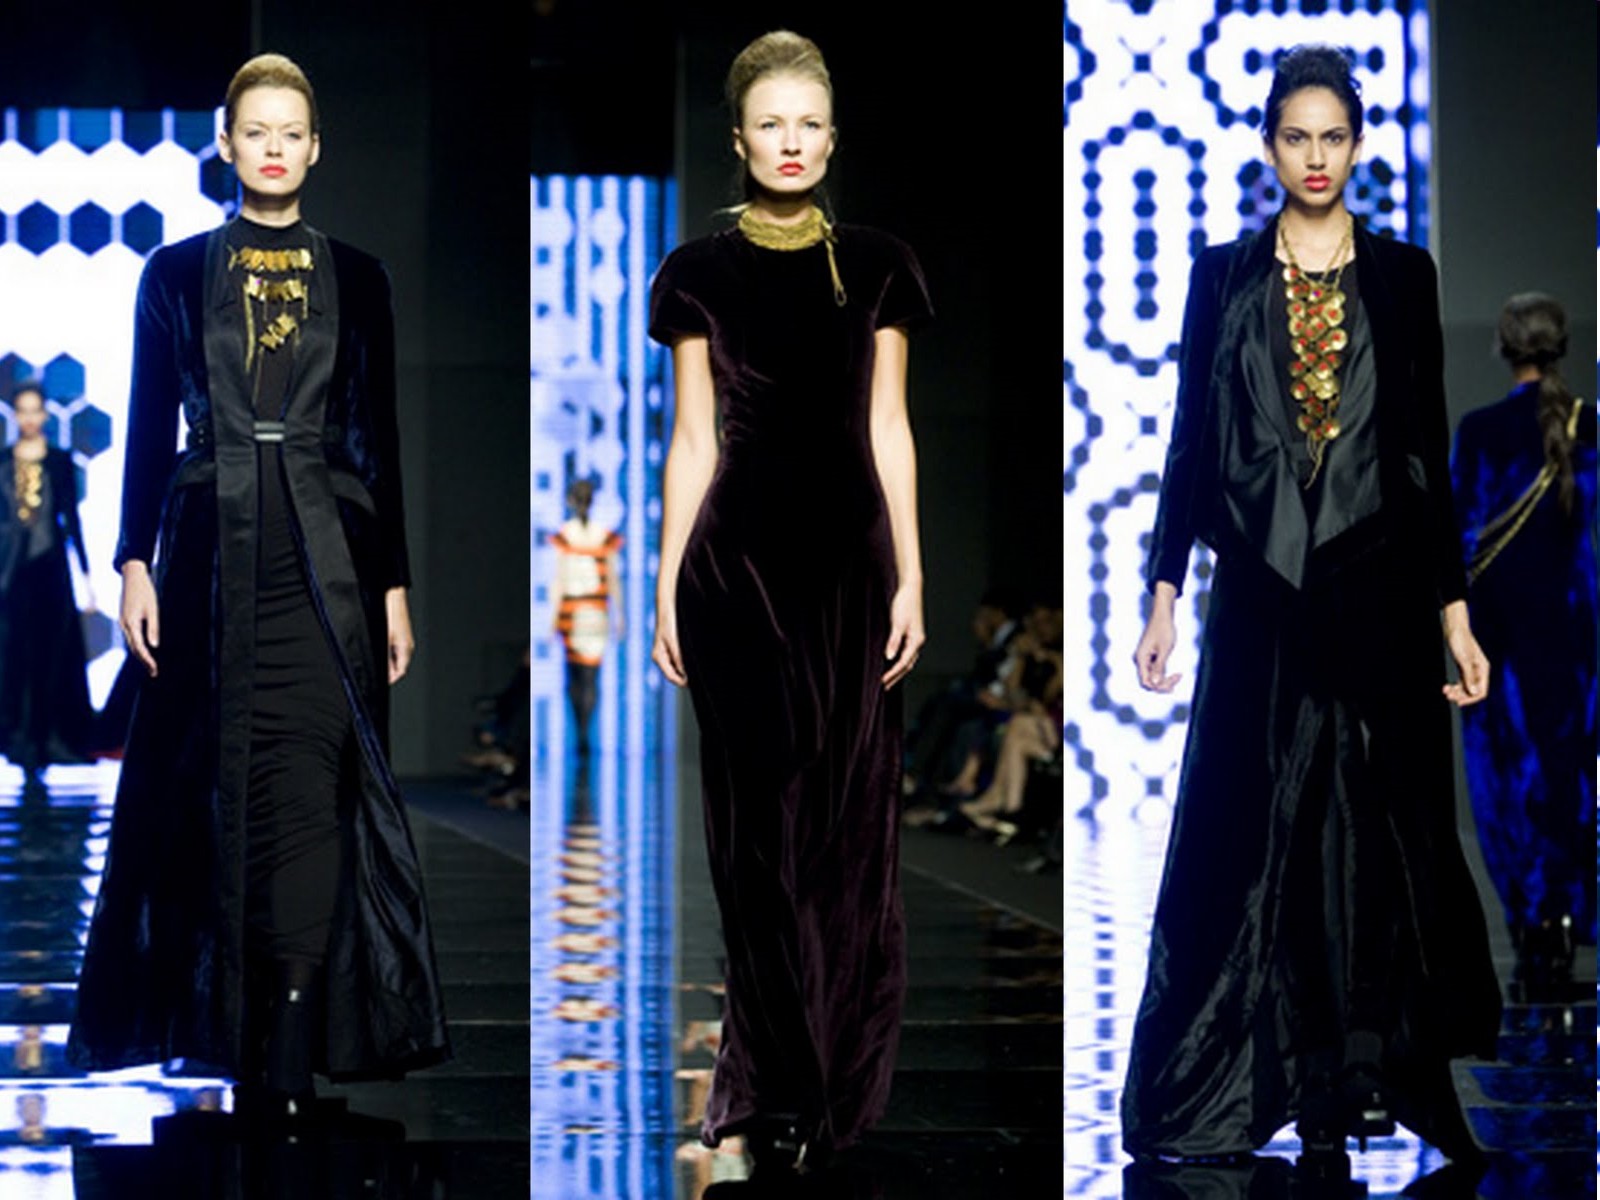 Dubai Fashion Week 2012 - Fashion Trends - Latest Fashion News, Trends ...